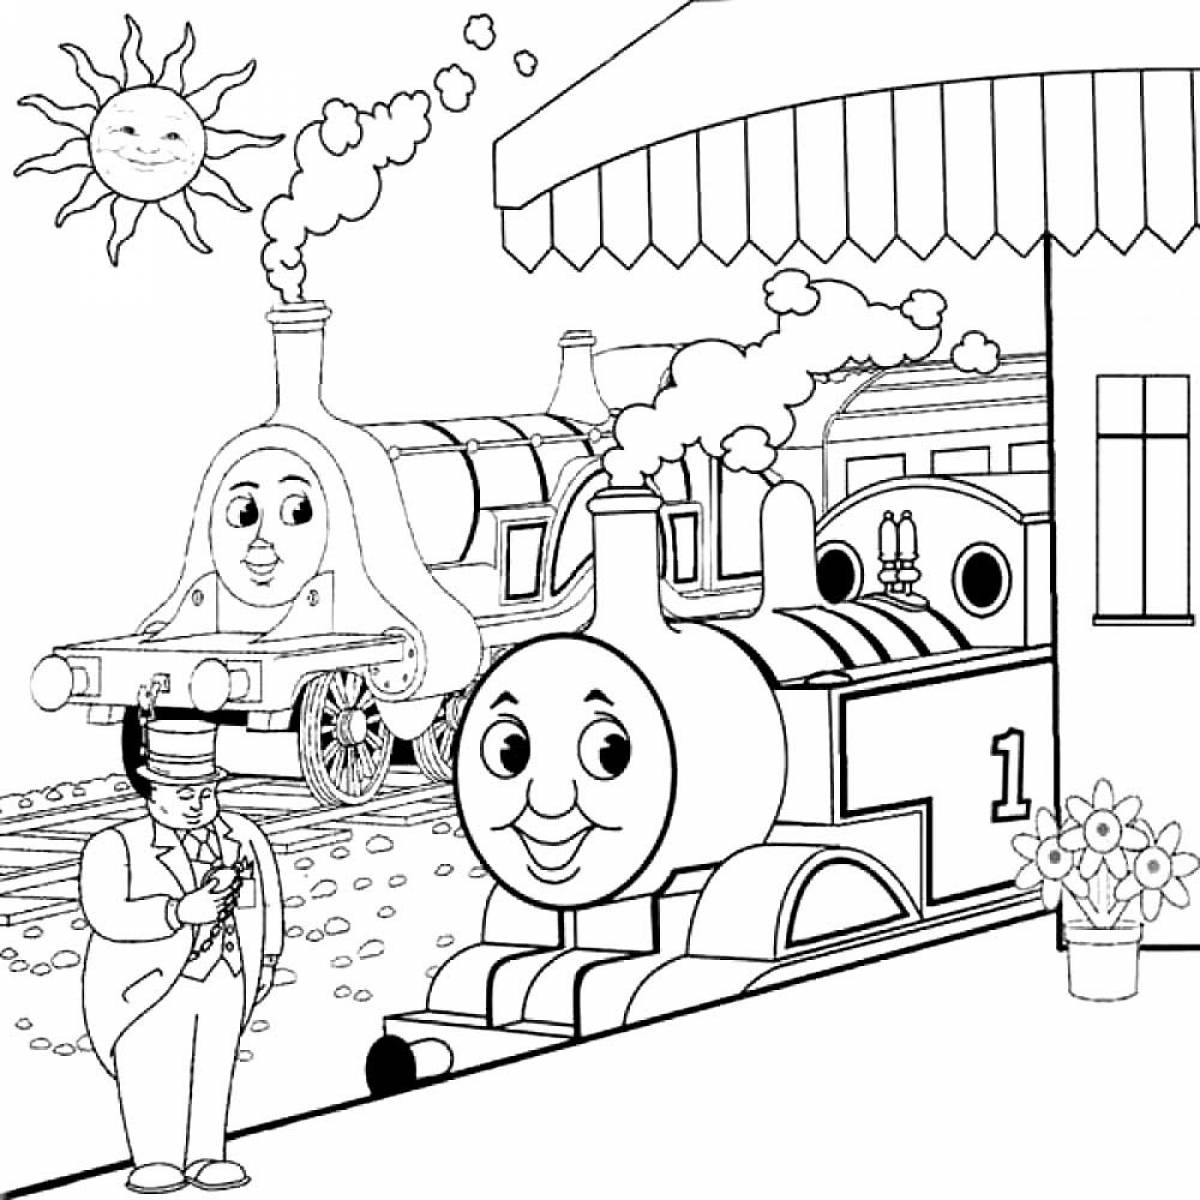 Thomas the engine on the platform